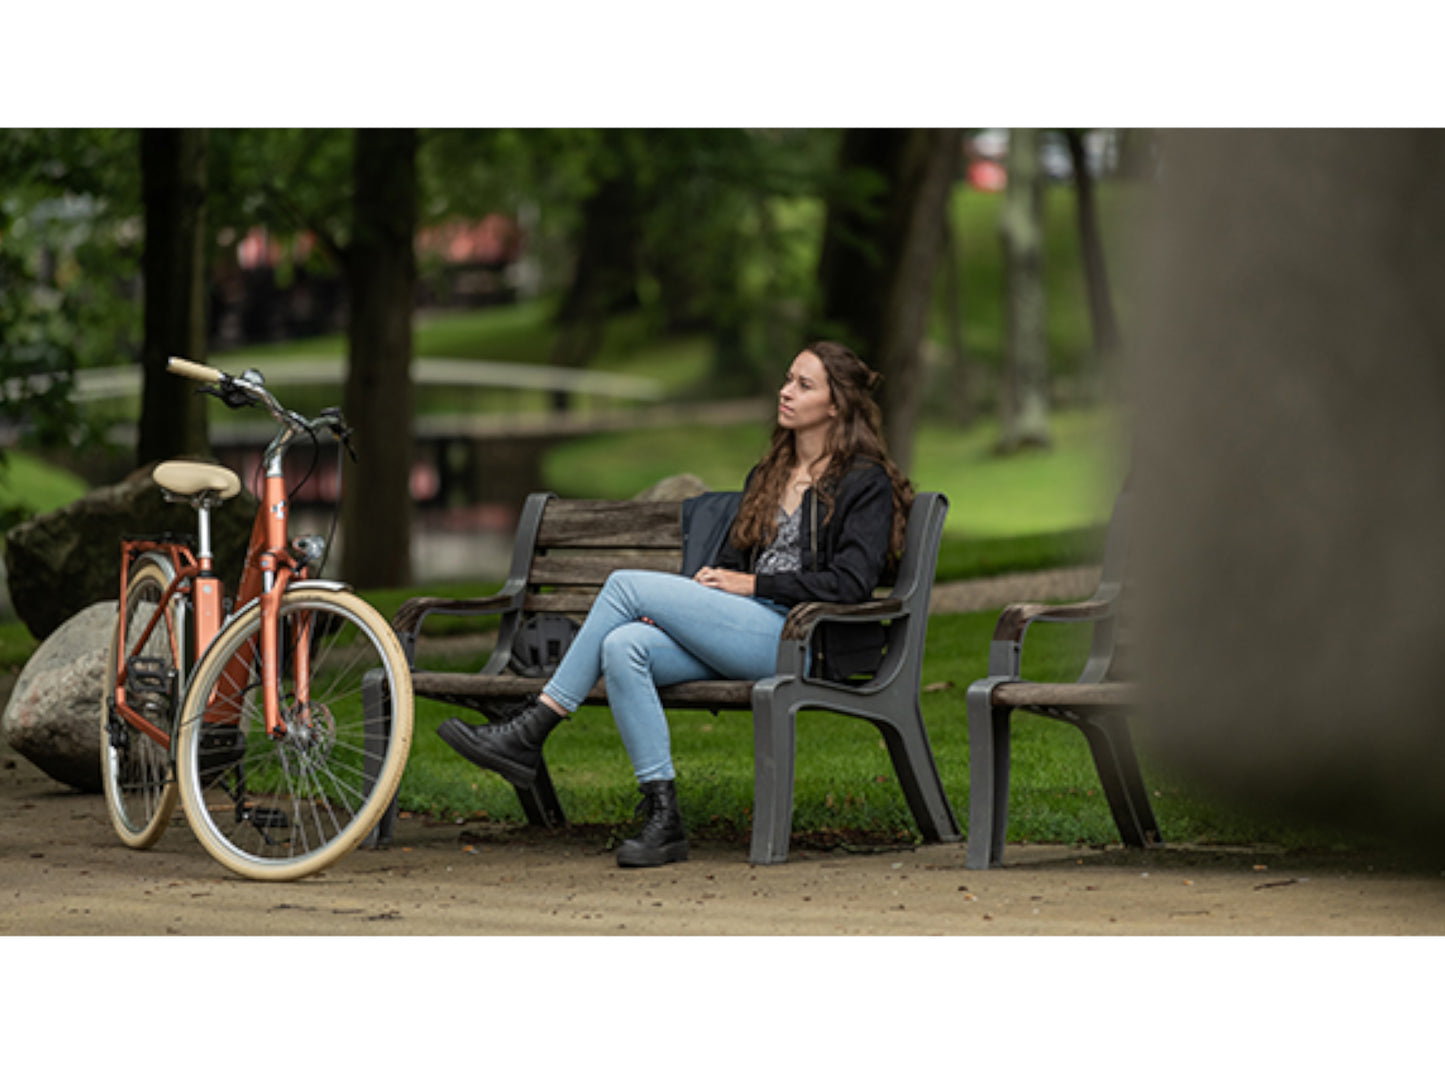 Cube Ella Ride Hybrid 500 eMTB hardtail woman sitting on park bench next to bike